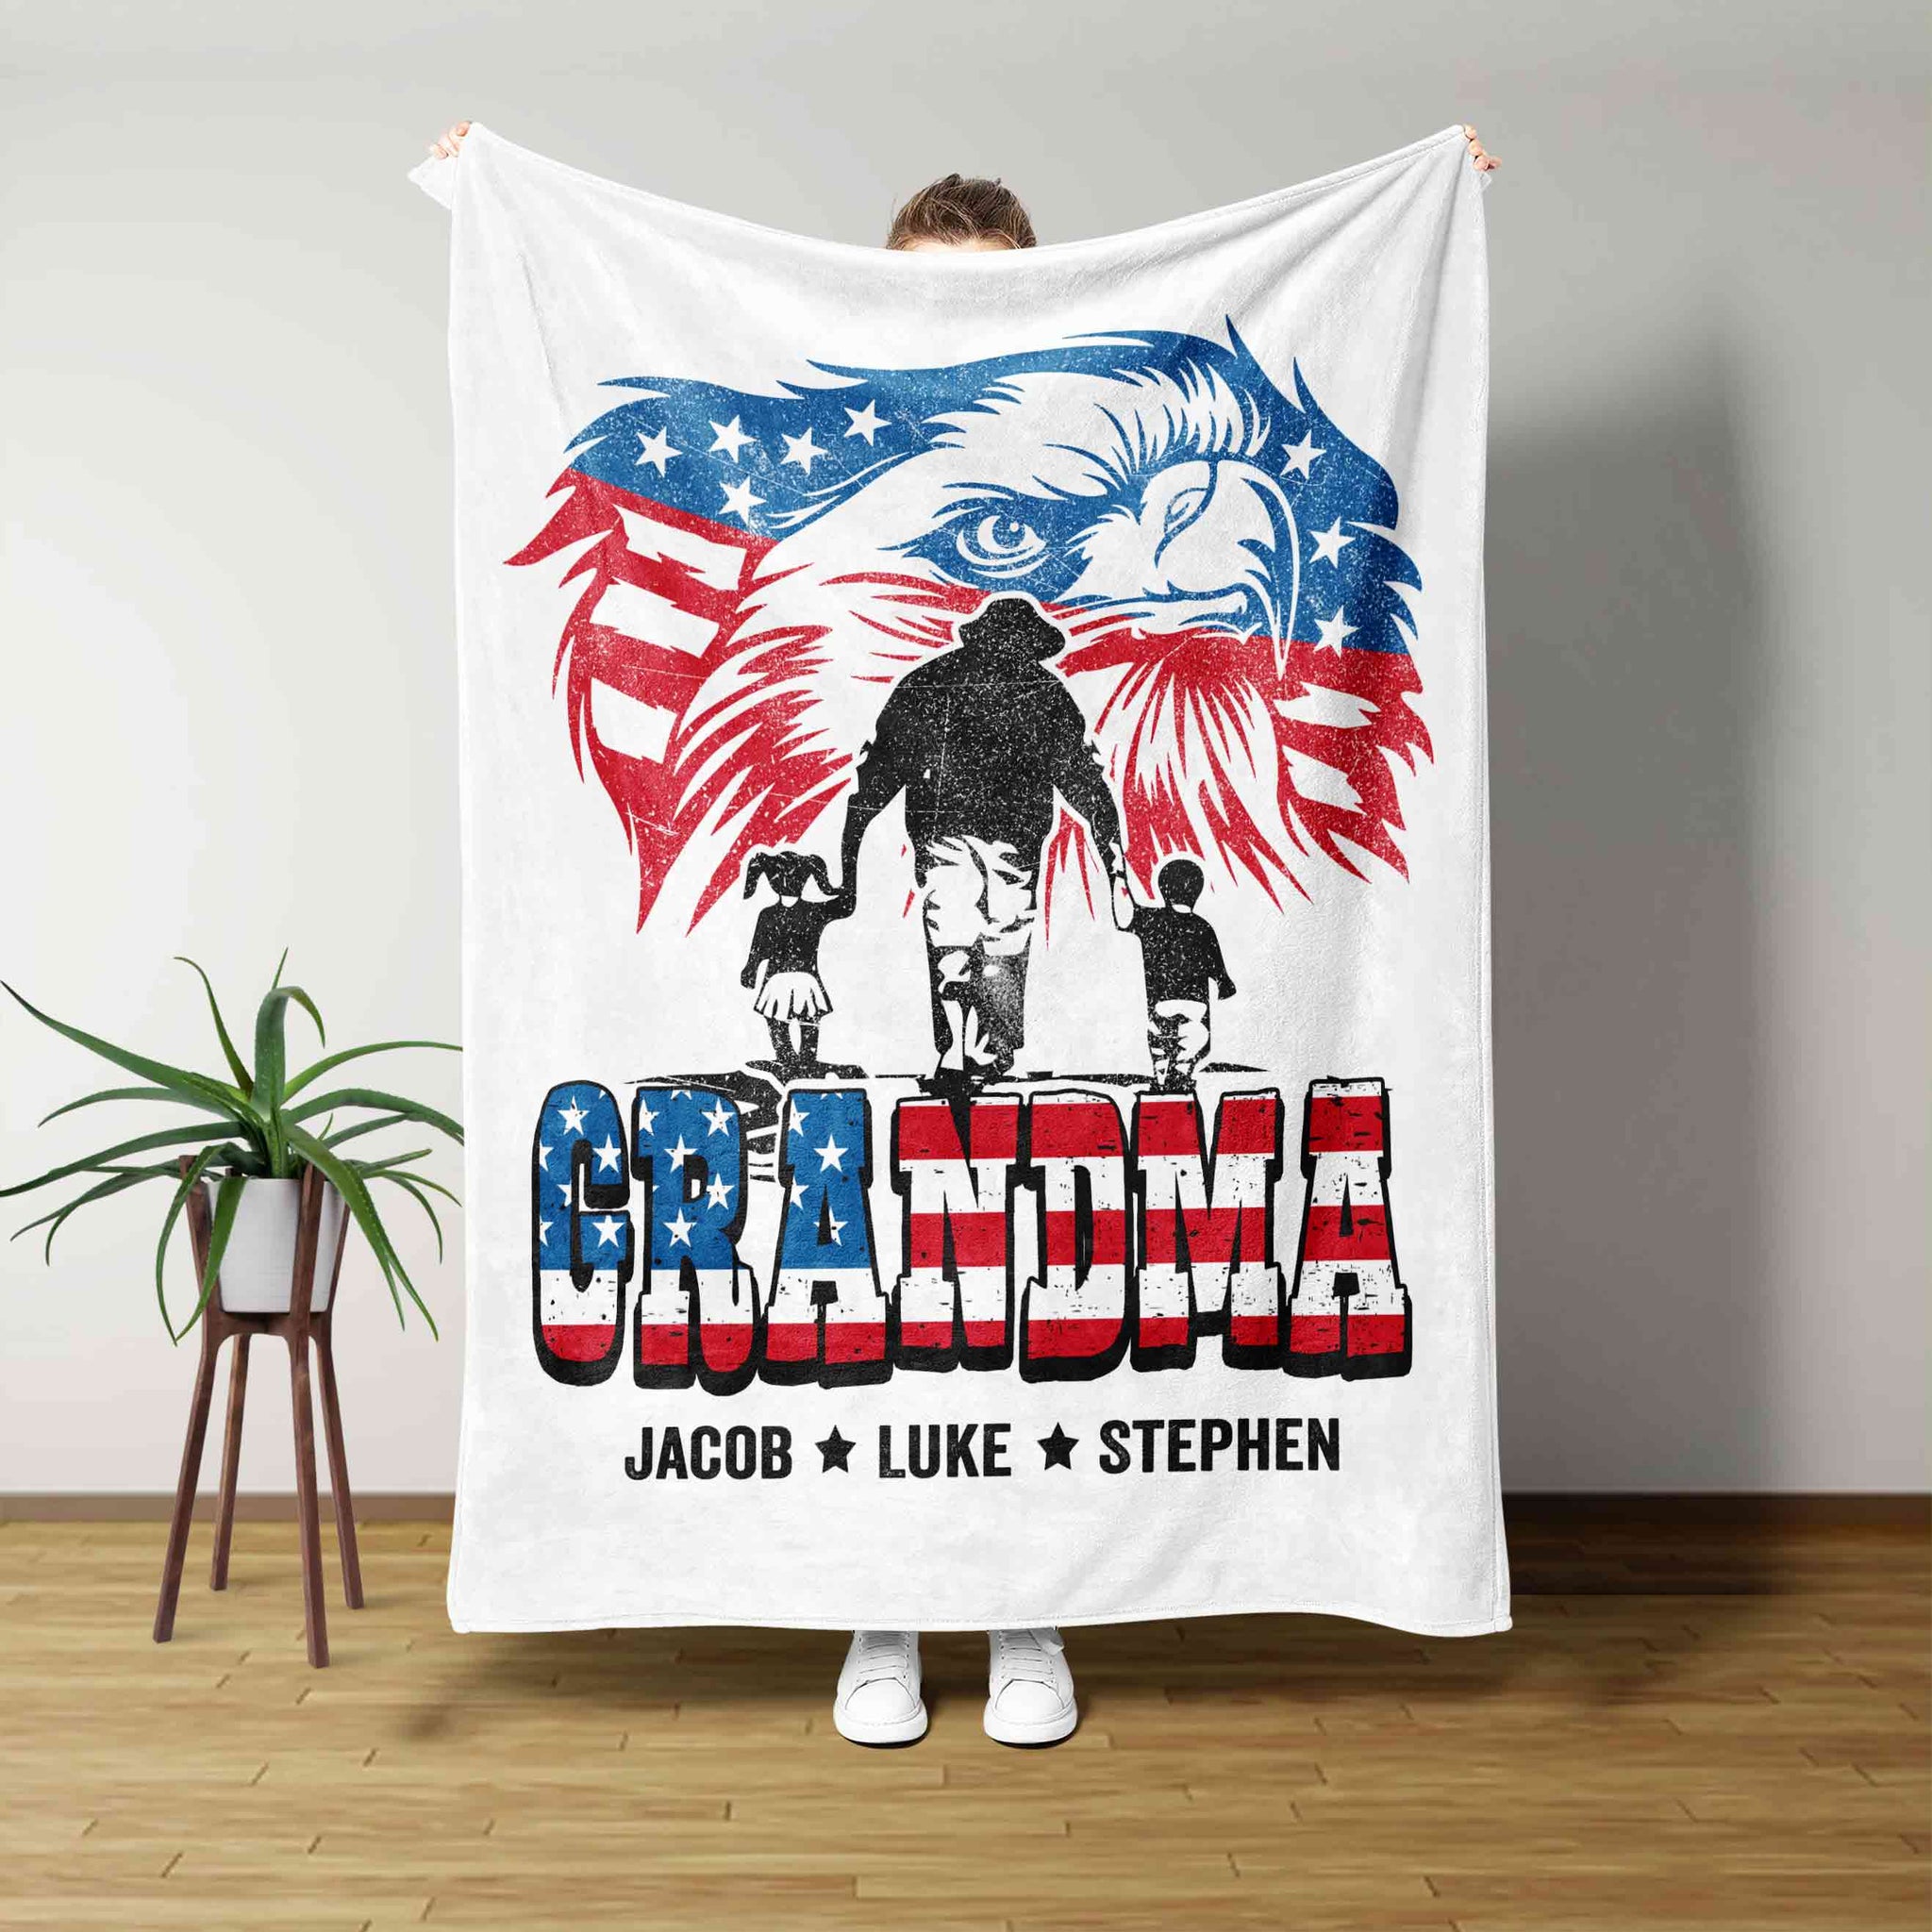 Grandma Blanket, Eagle Blanket, American Flag Blanket, Custom Name Blanket, Family Blanket, Gift Blanket